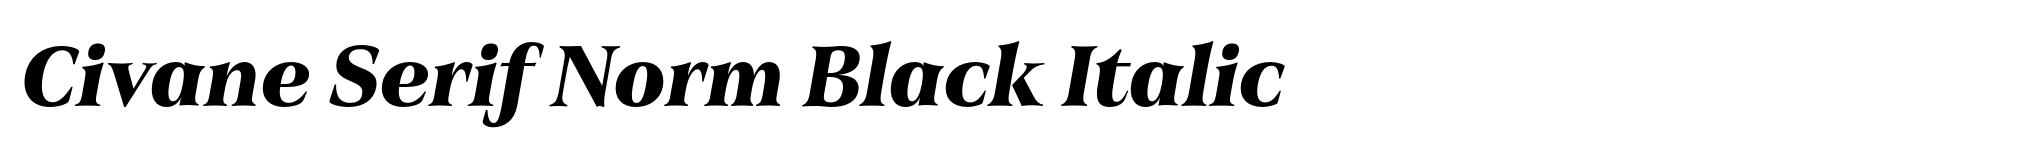 Civane Serif Norm Black Italic image